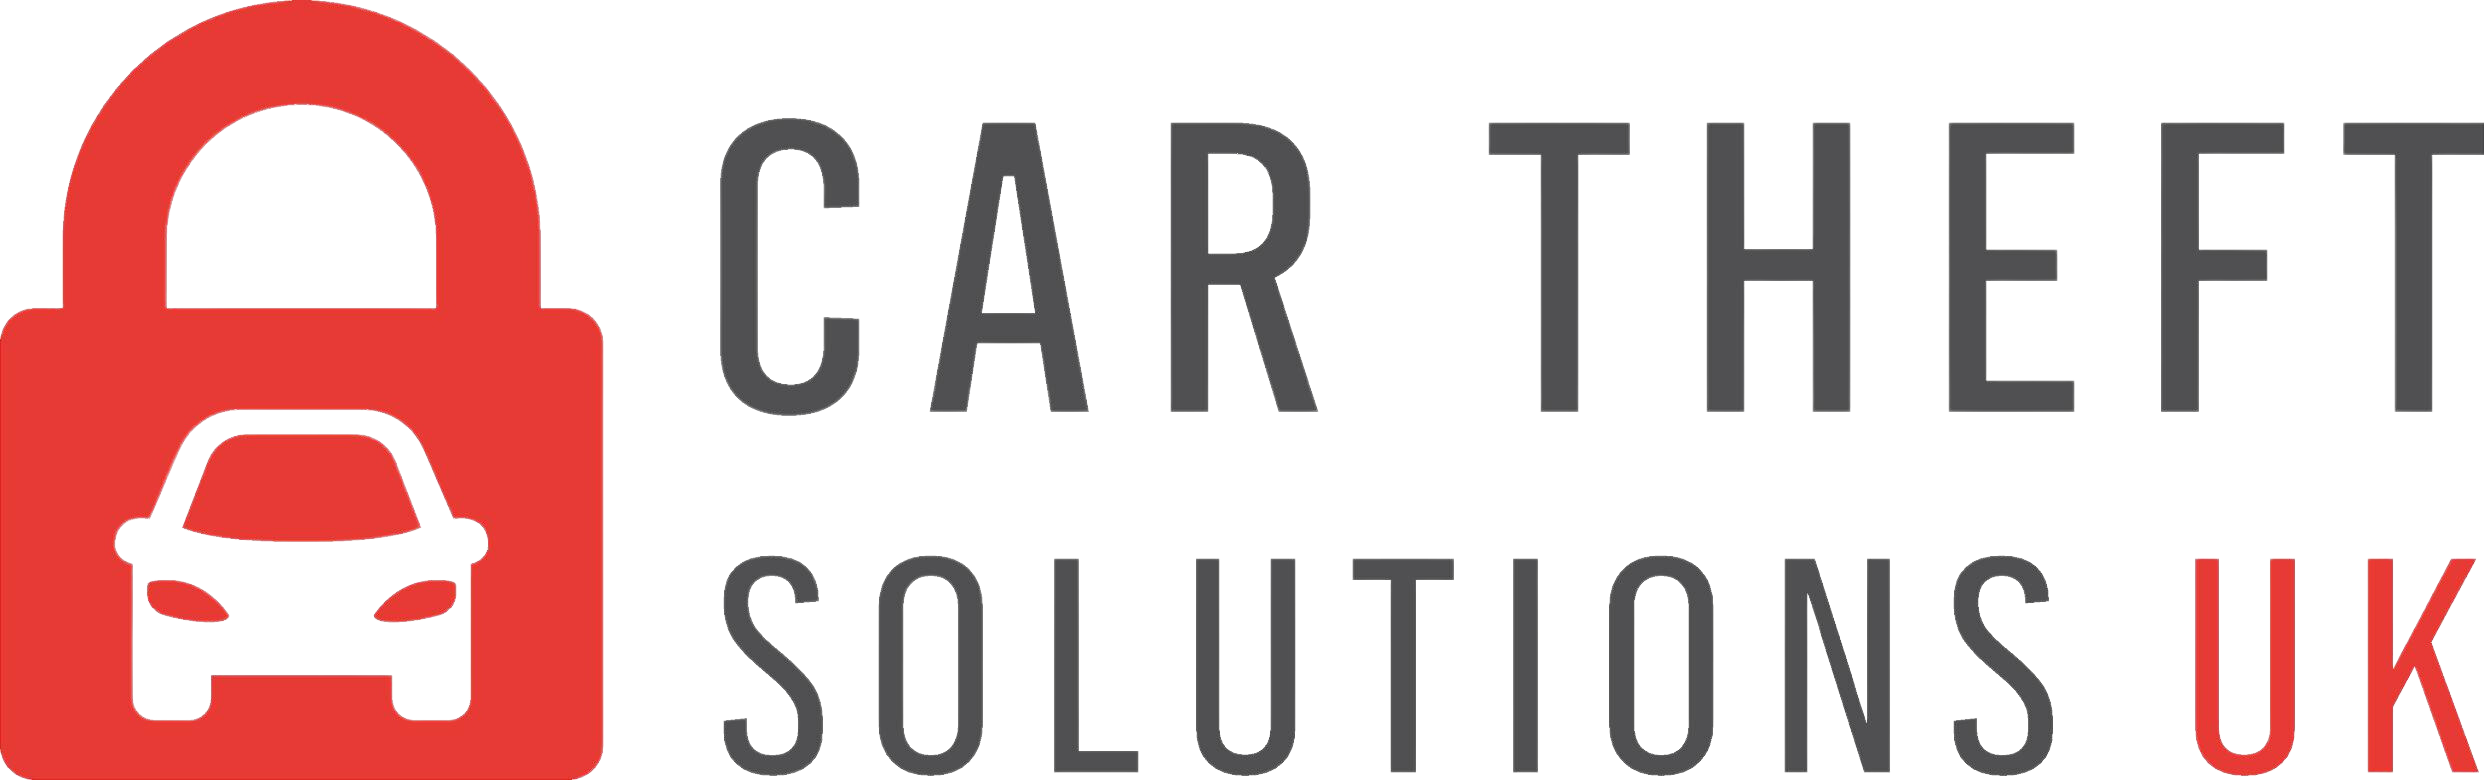 car_theft_logo